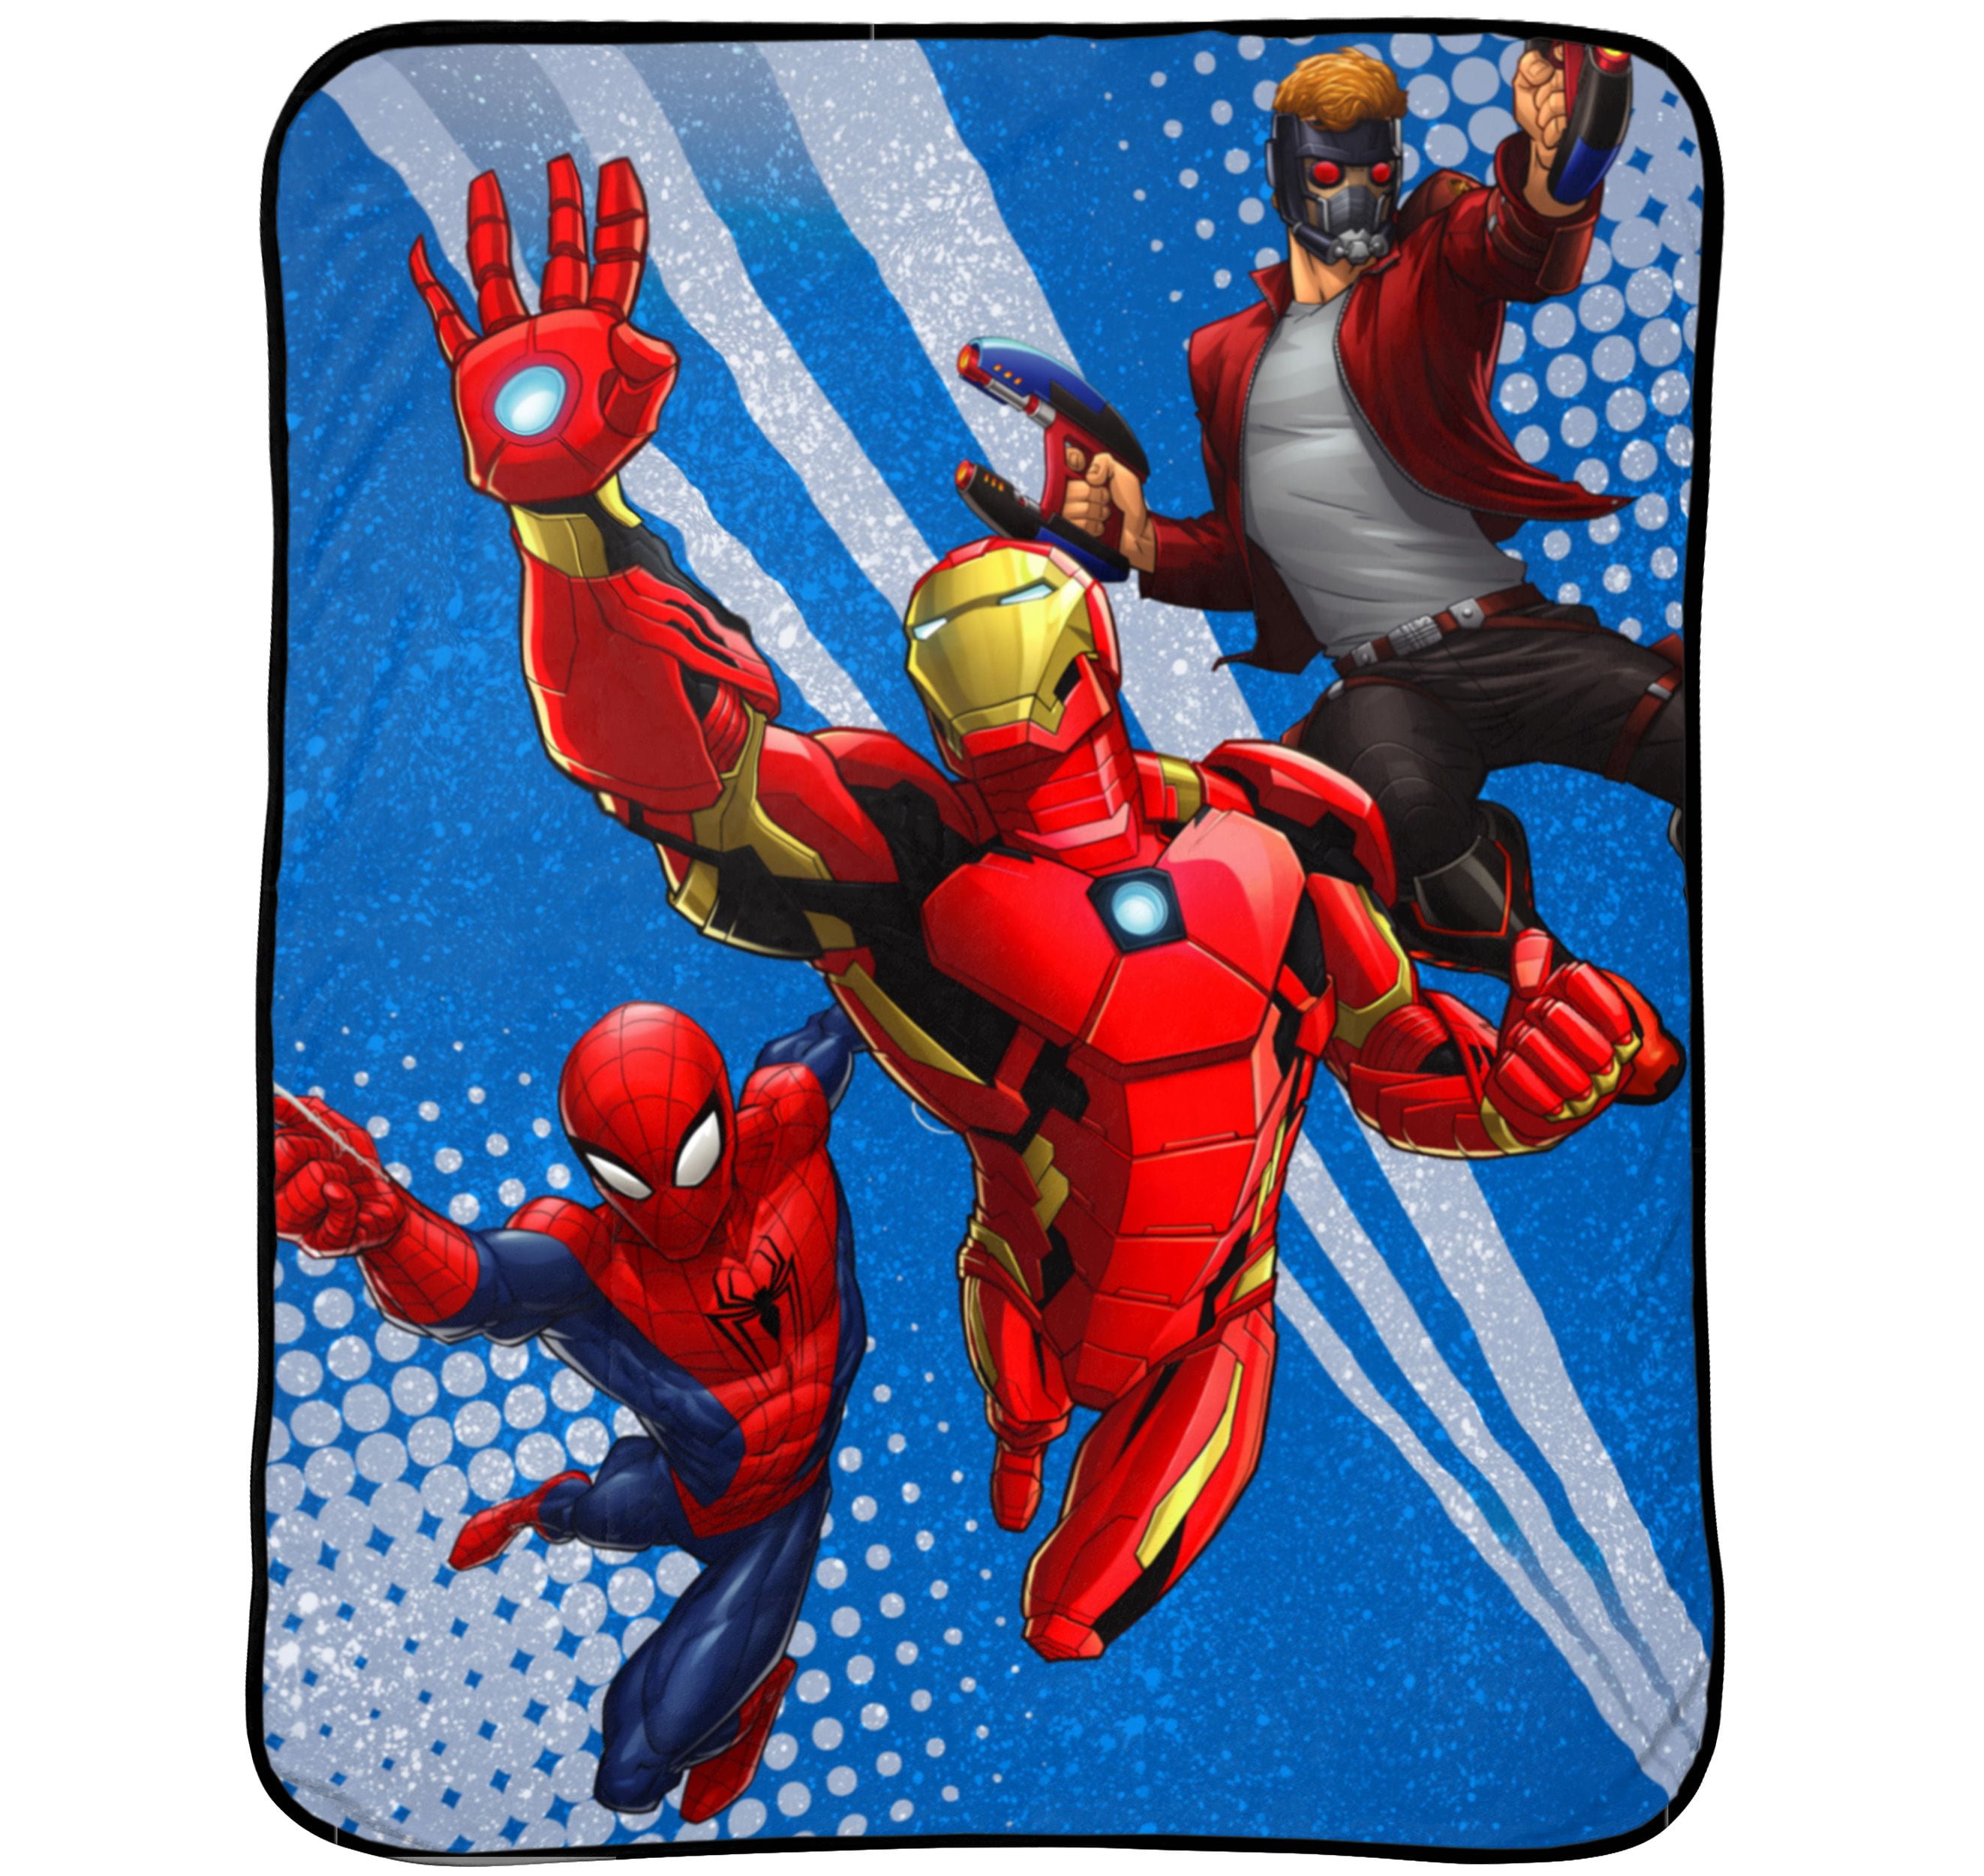 Captain America Super Soft Throws Marvel New 46in x 60in Blanket US Seller 